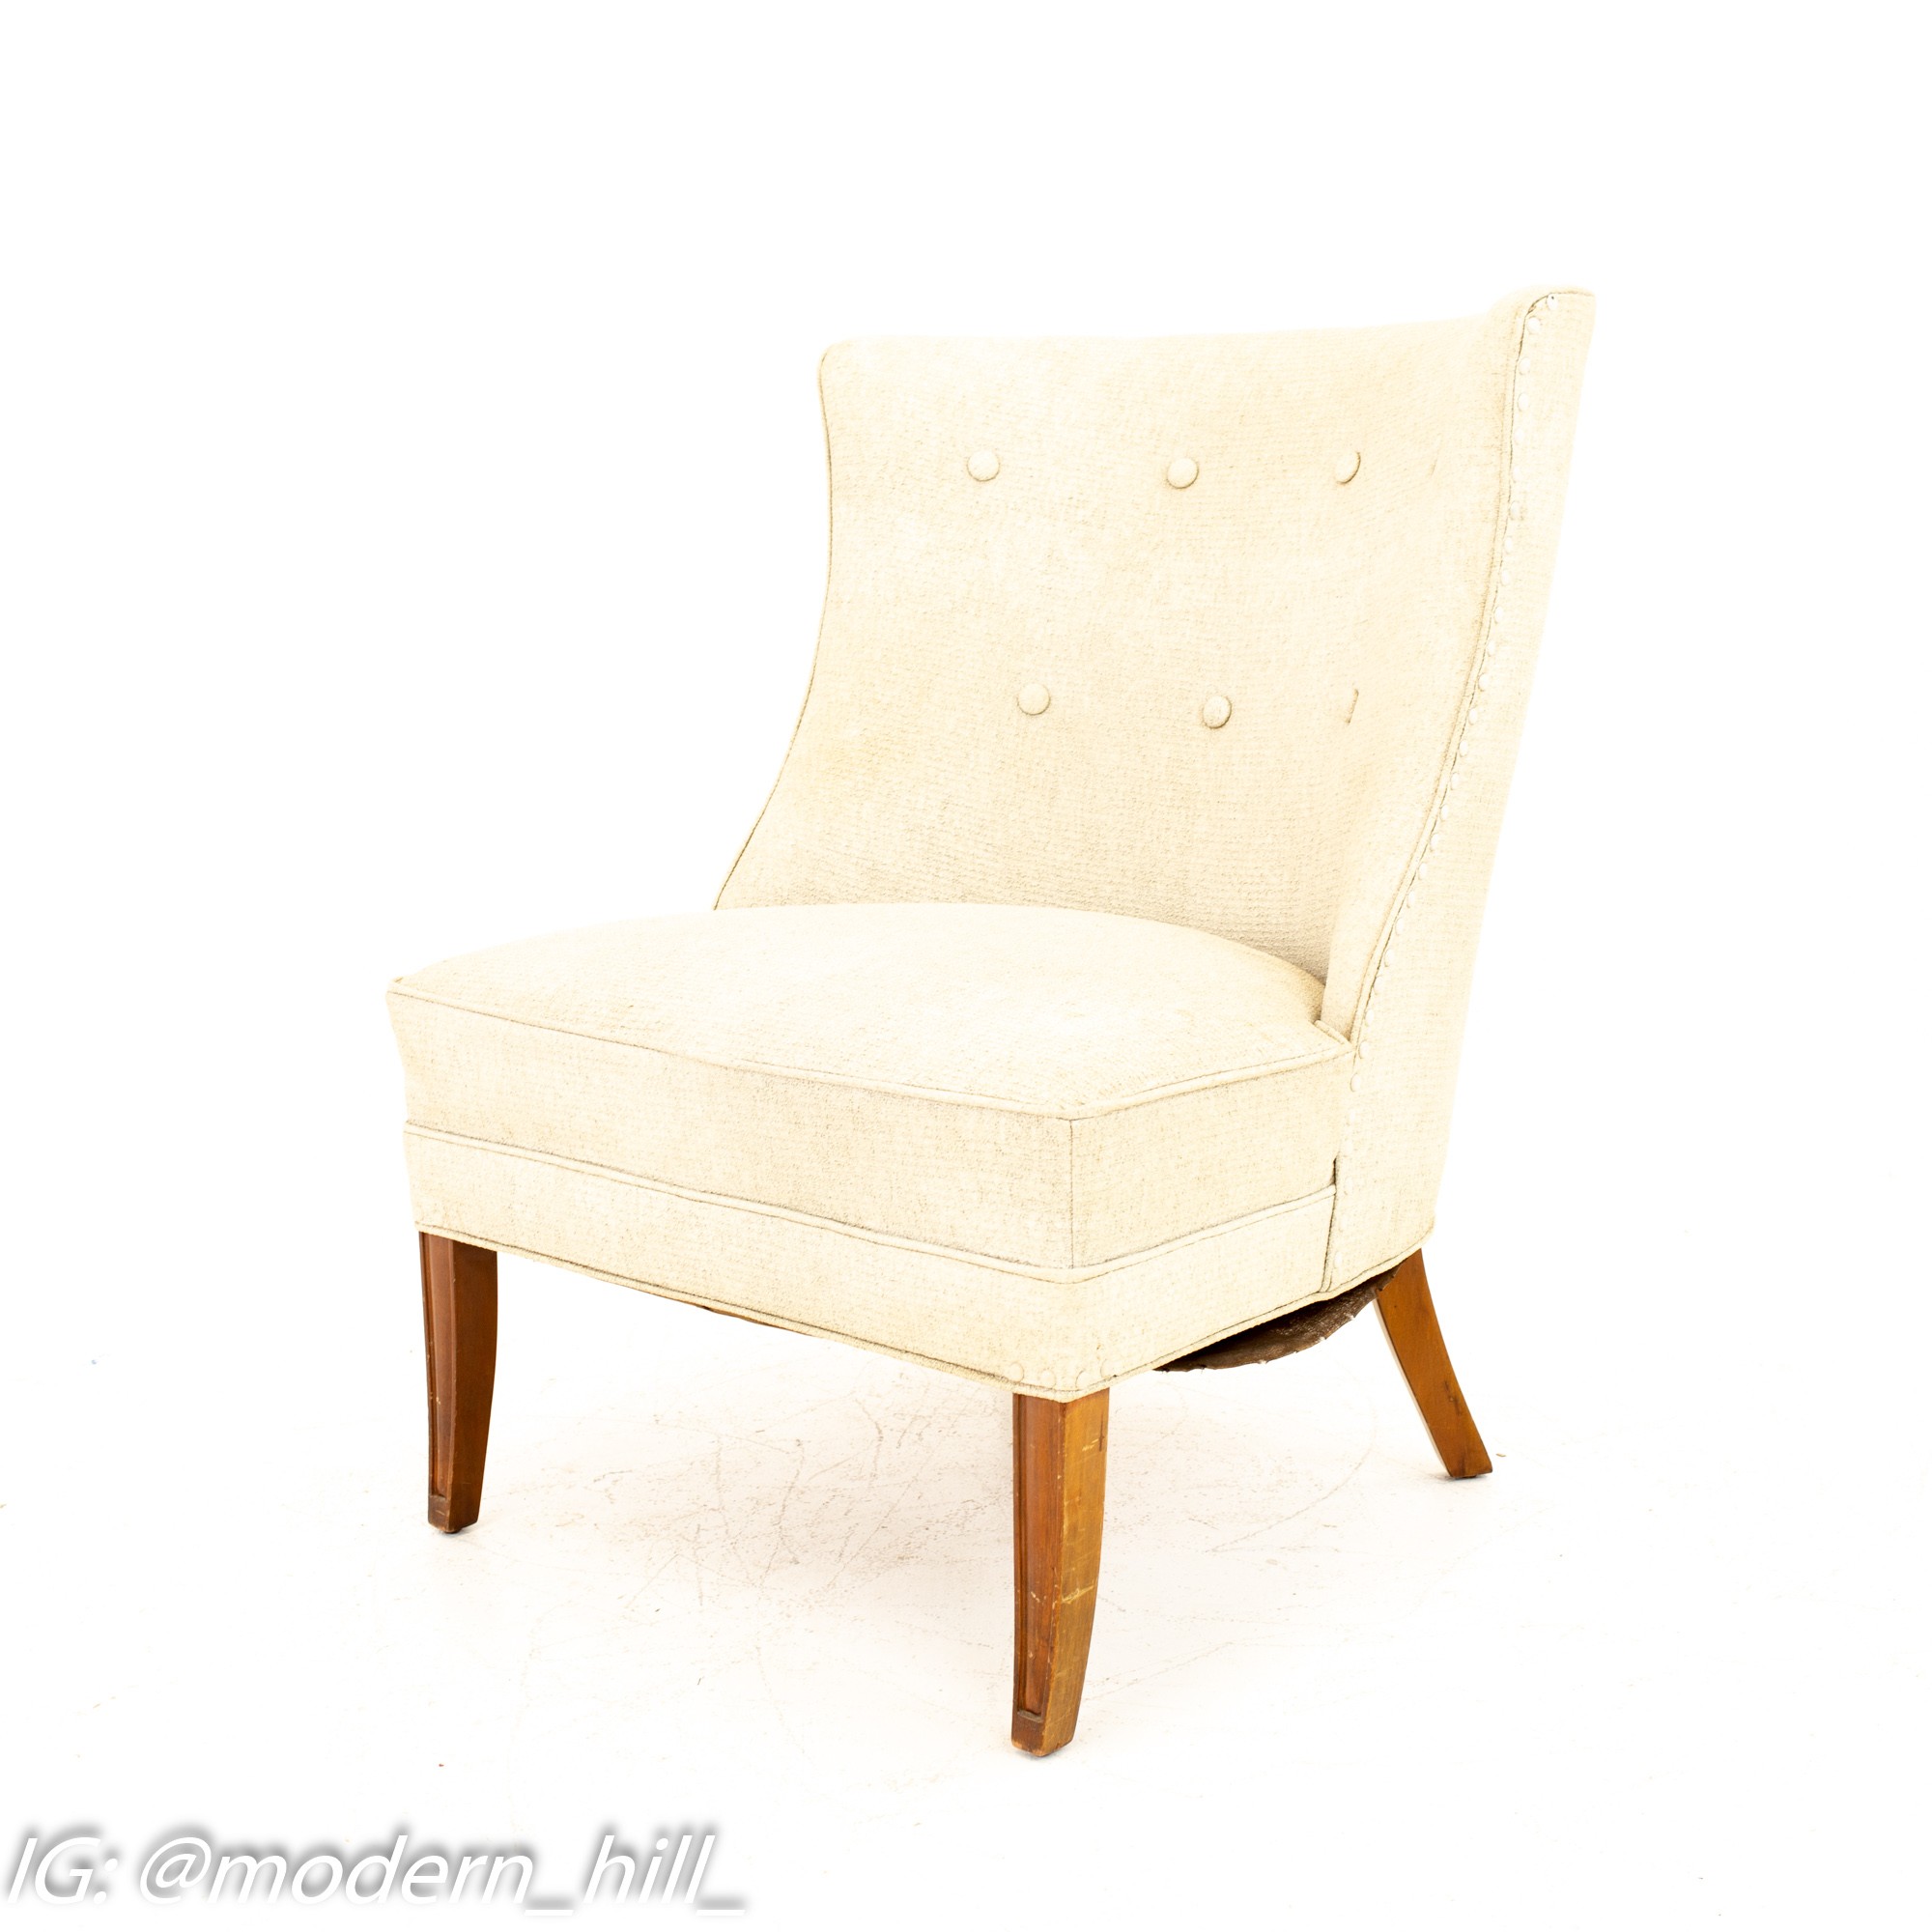 Dunbar Style Mid Century Lounge Chairs - Pair